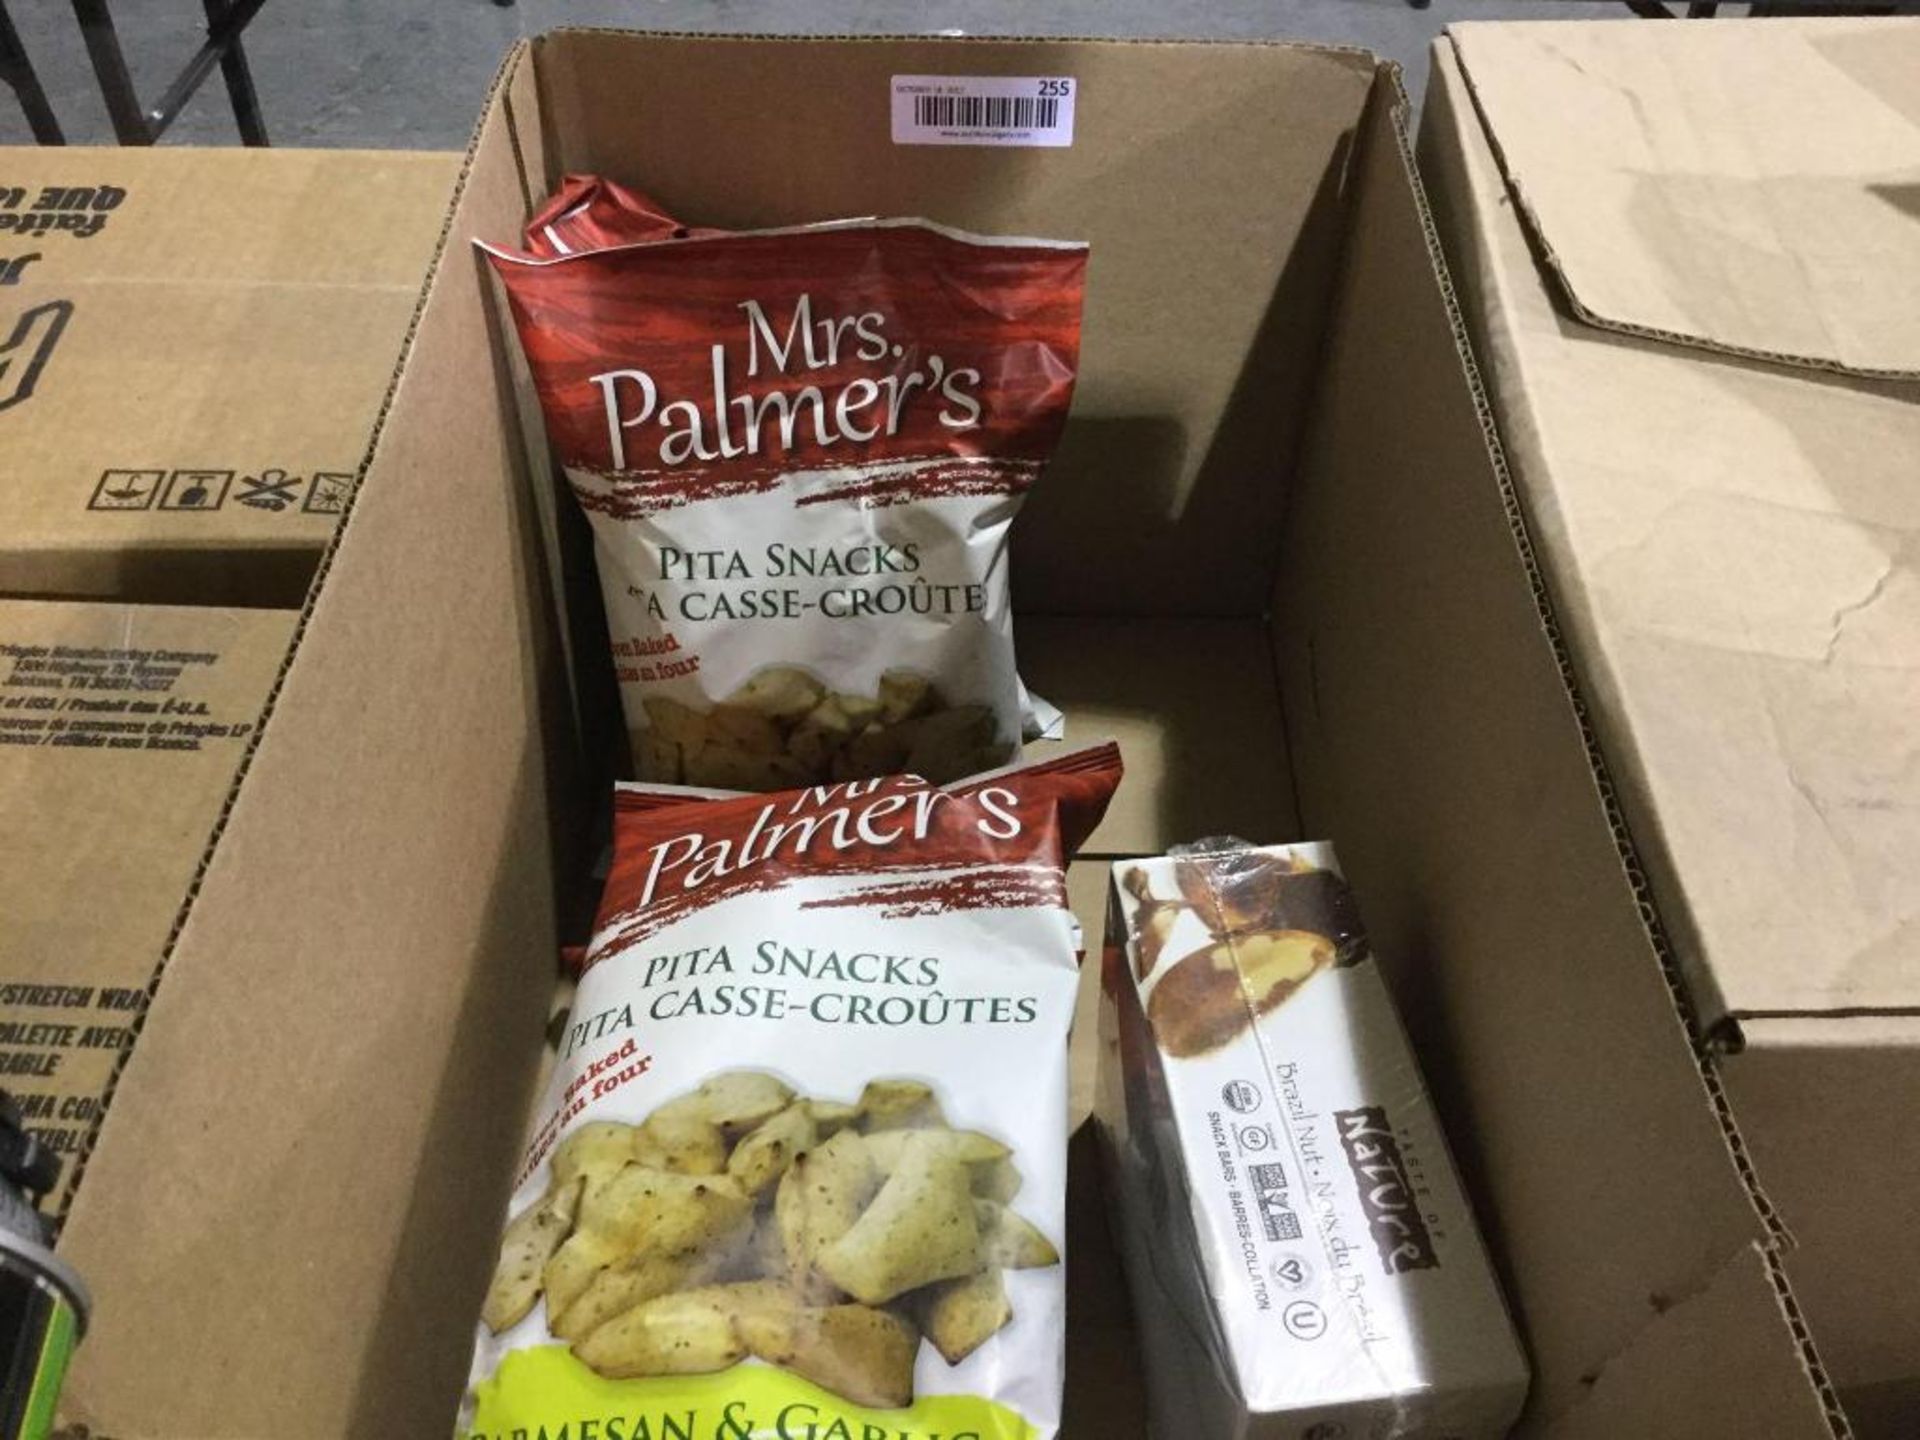 Open box of Mrs. Palmer's Pita Snacks - 170g bags